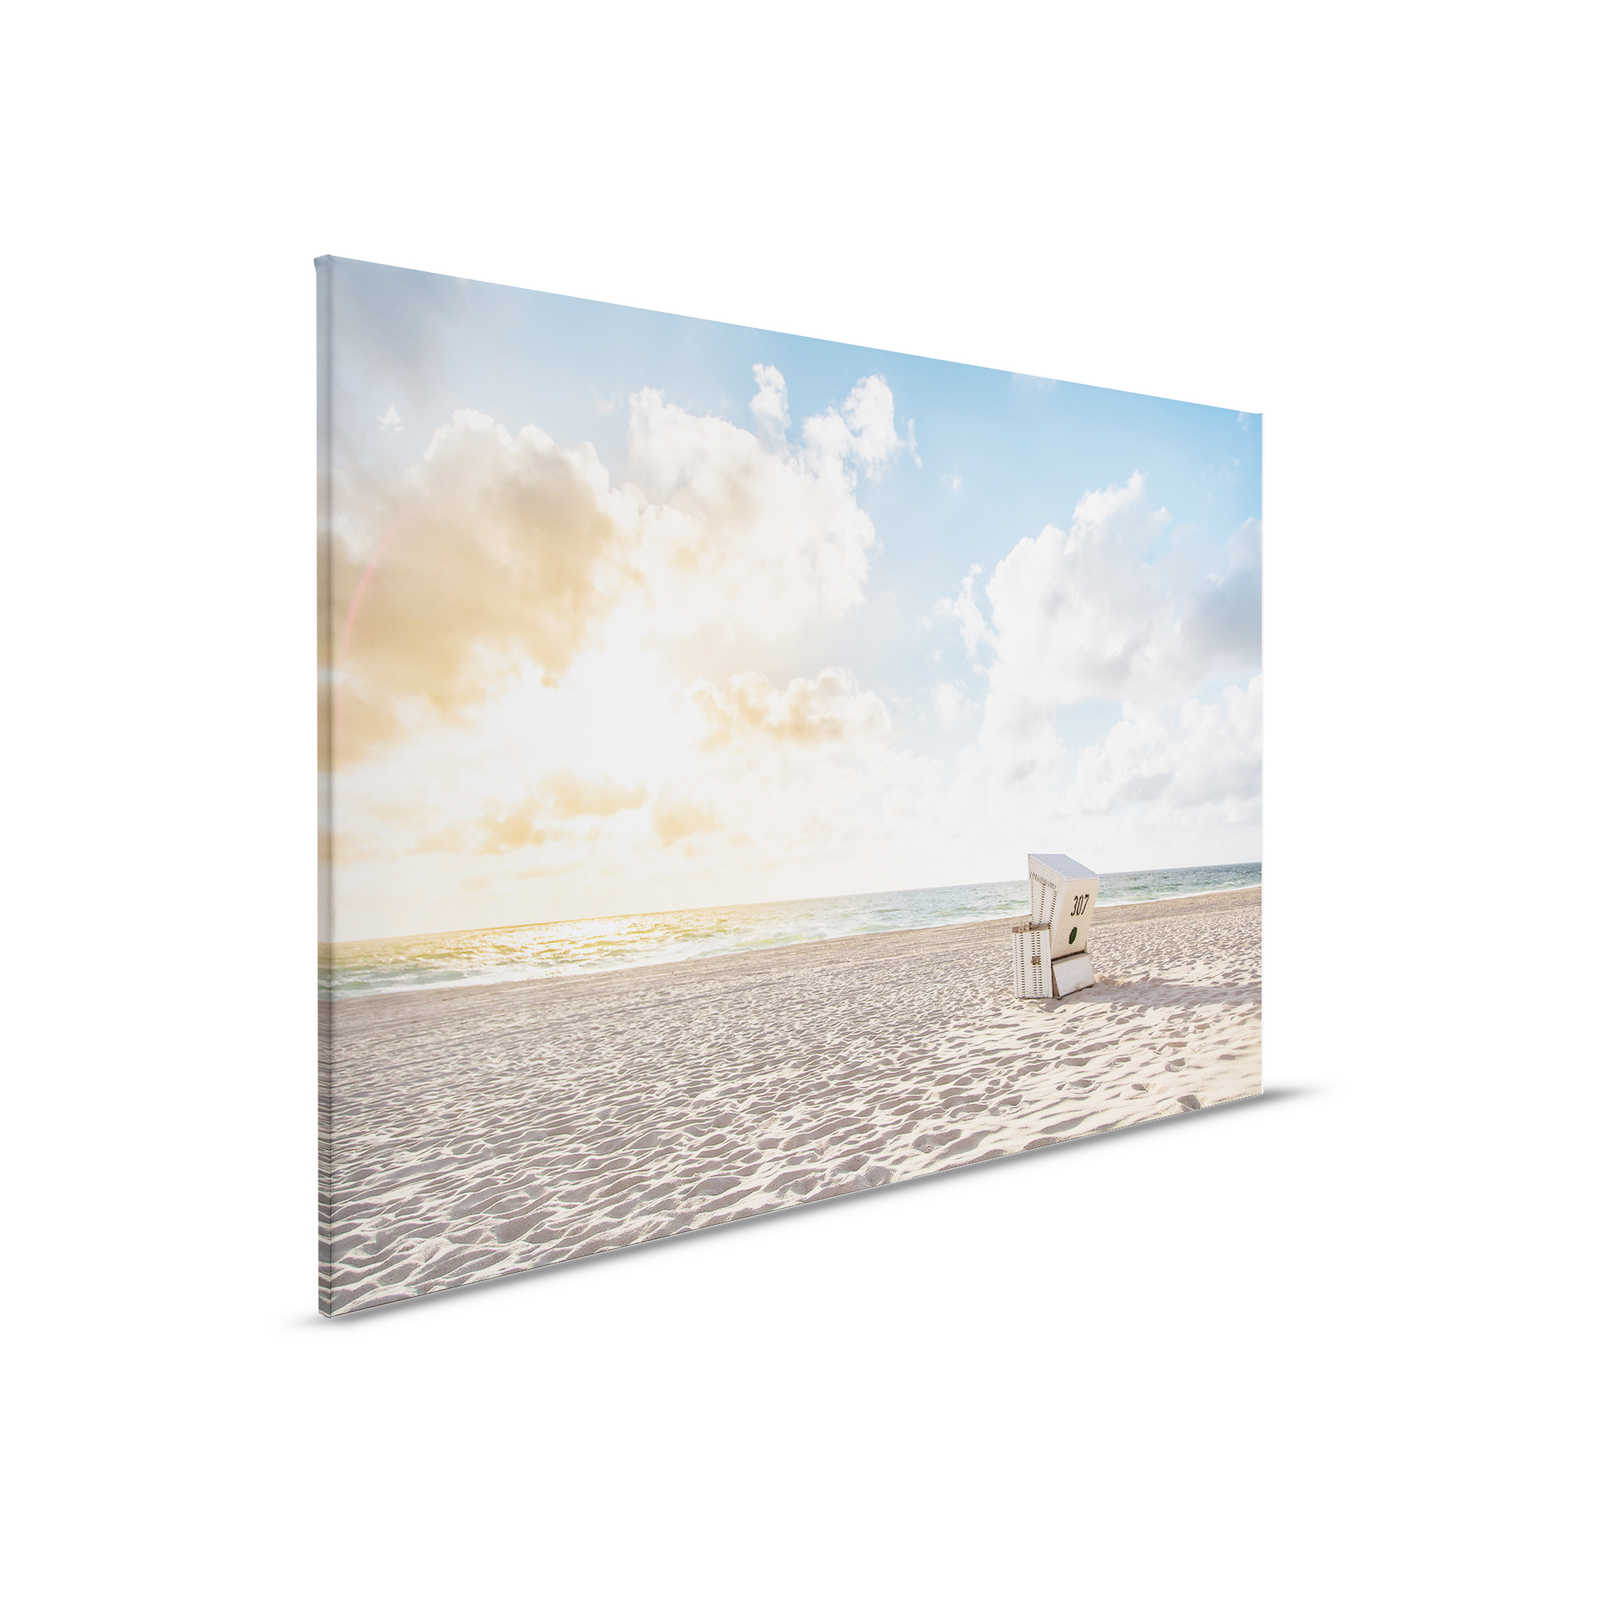         Leinwand mit Strandkorb bei Sonnenaufgang – 0,90 m x 0,60 m
    